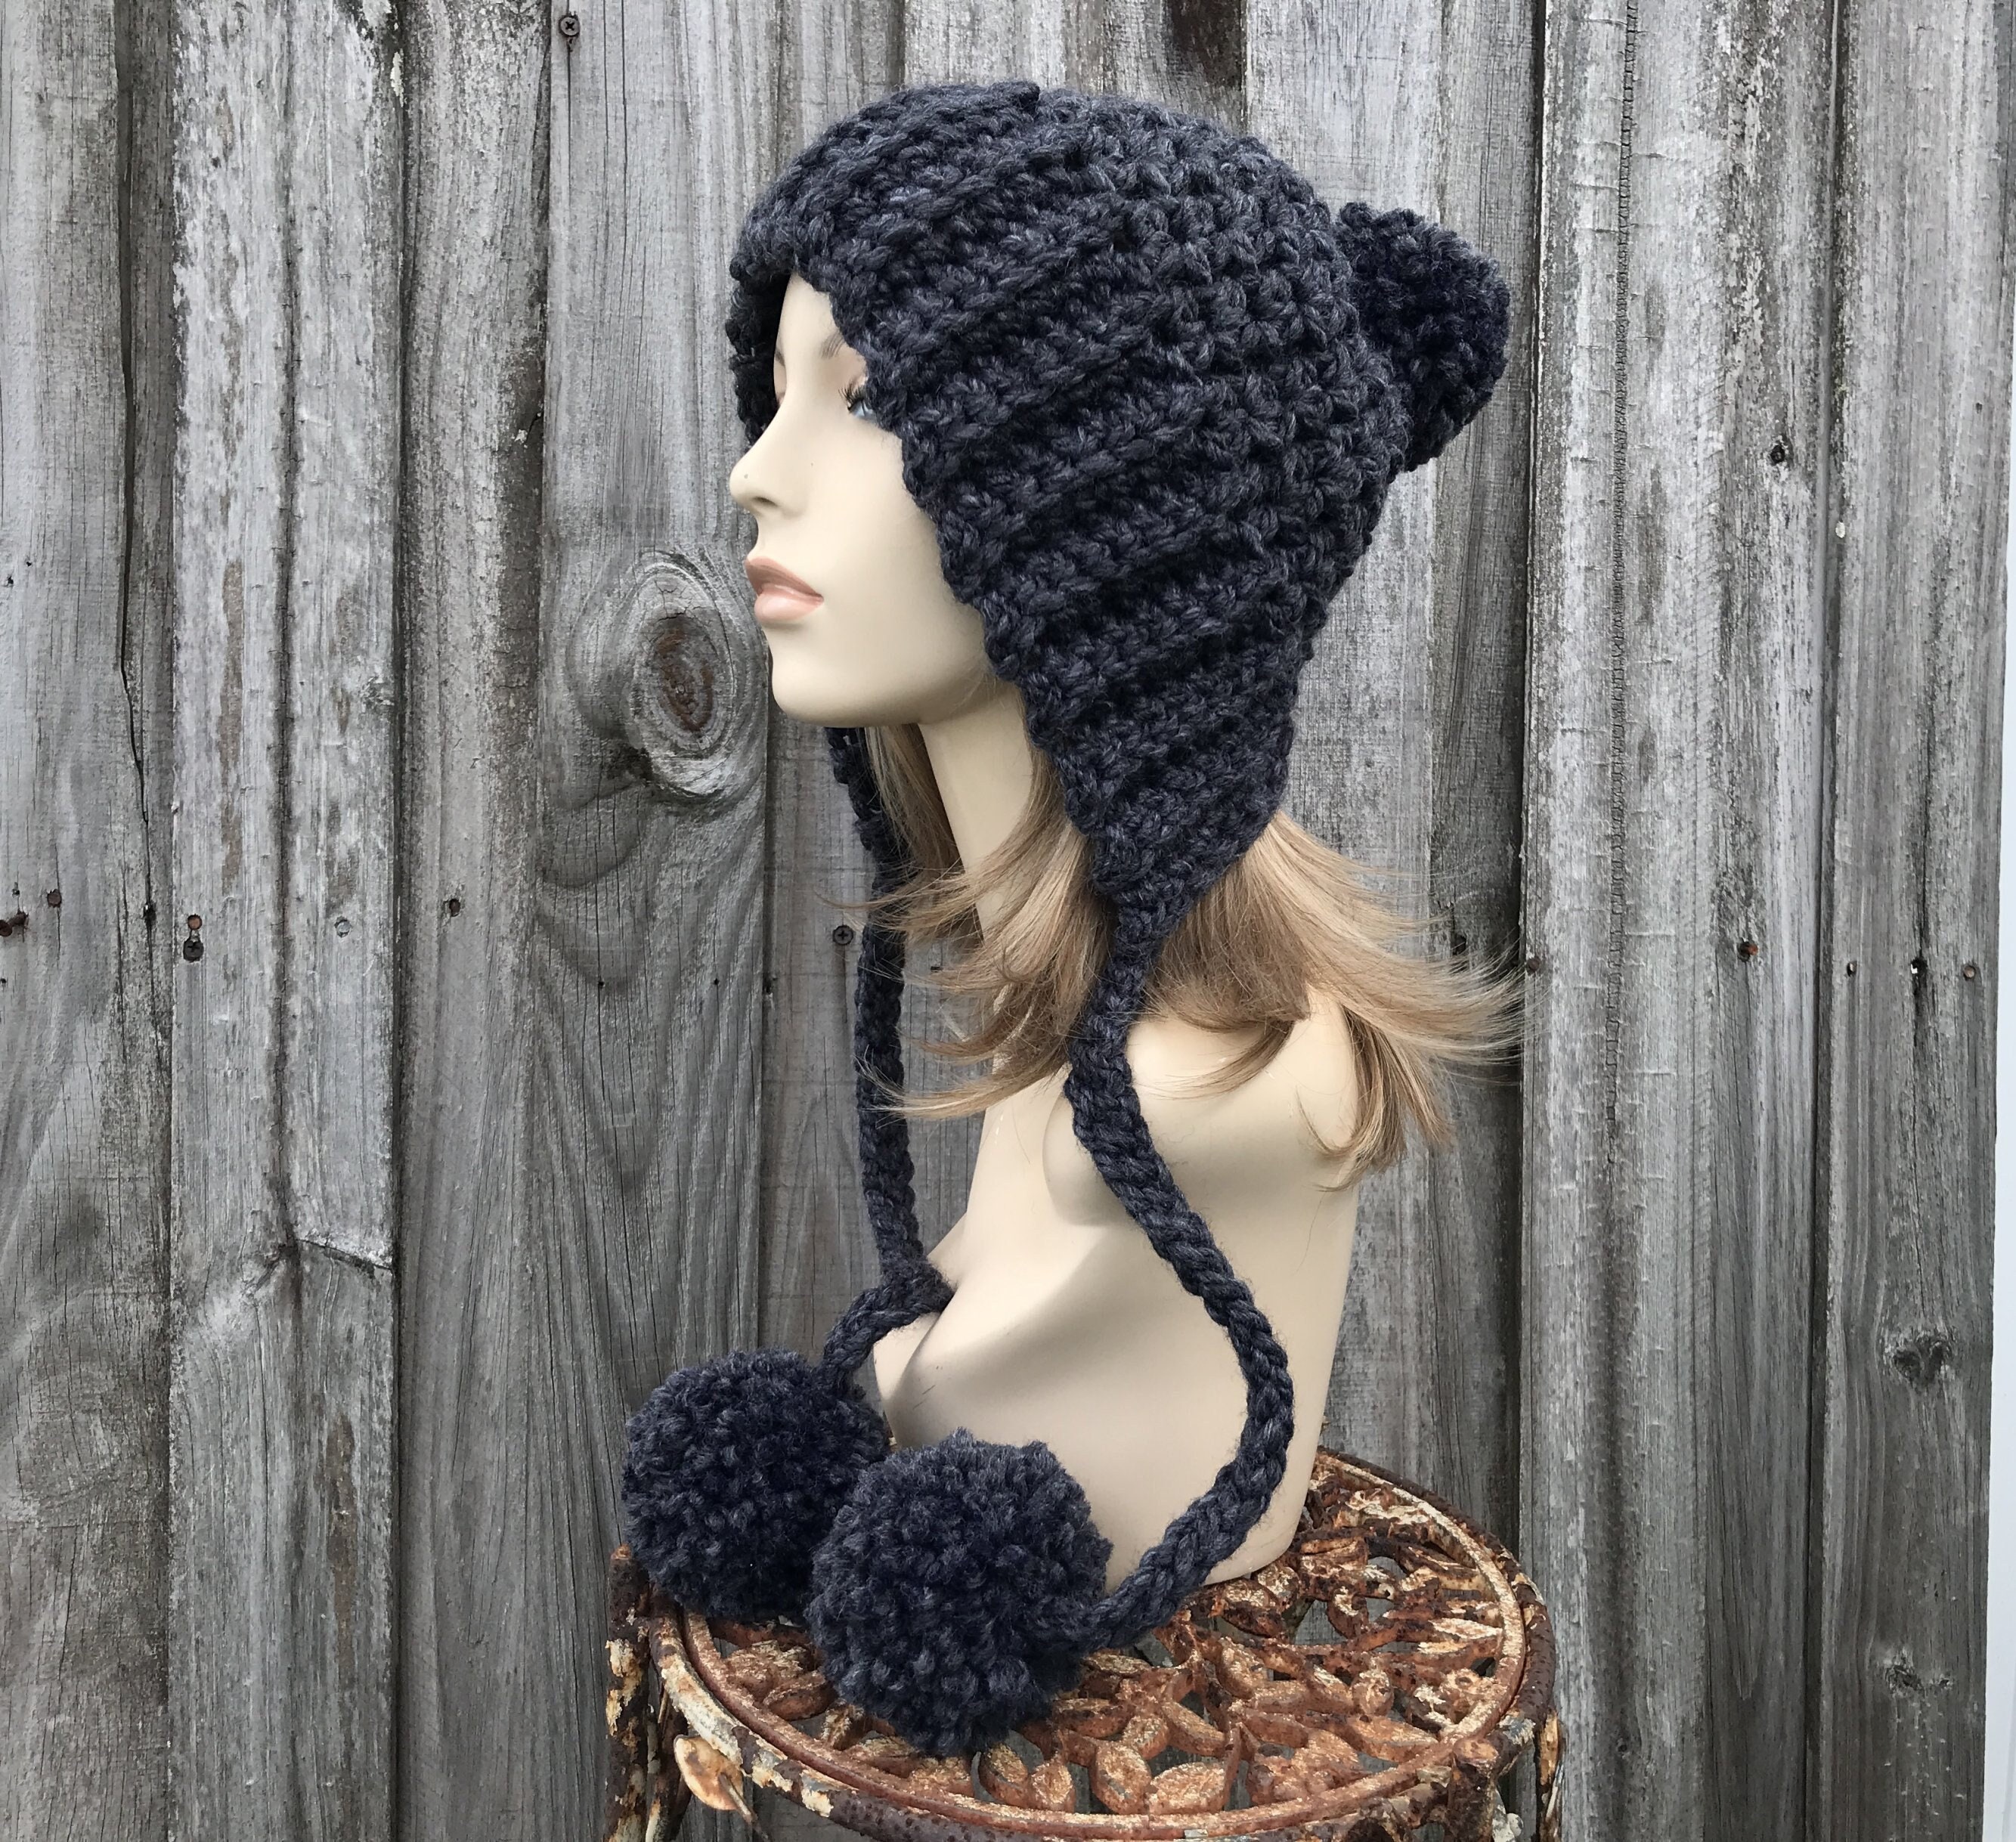 Lala crochet beanie, charcoal winter hat, crochet beanies for women